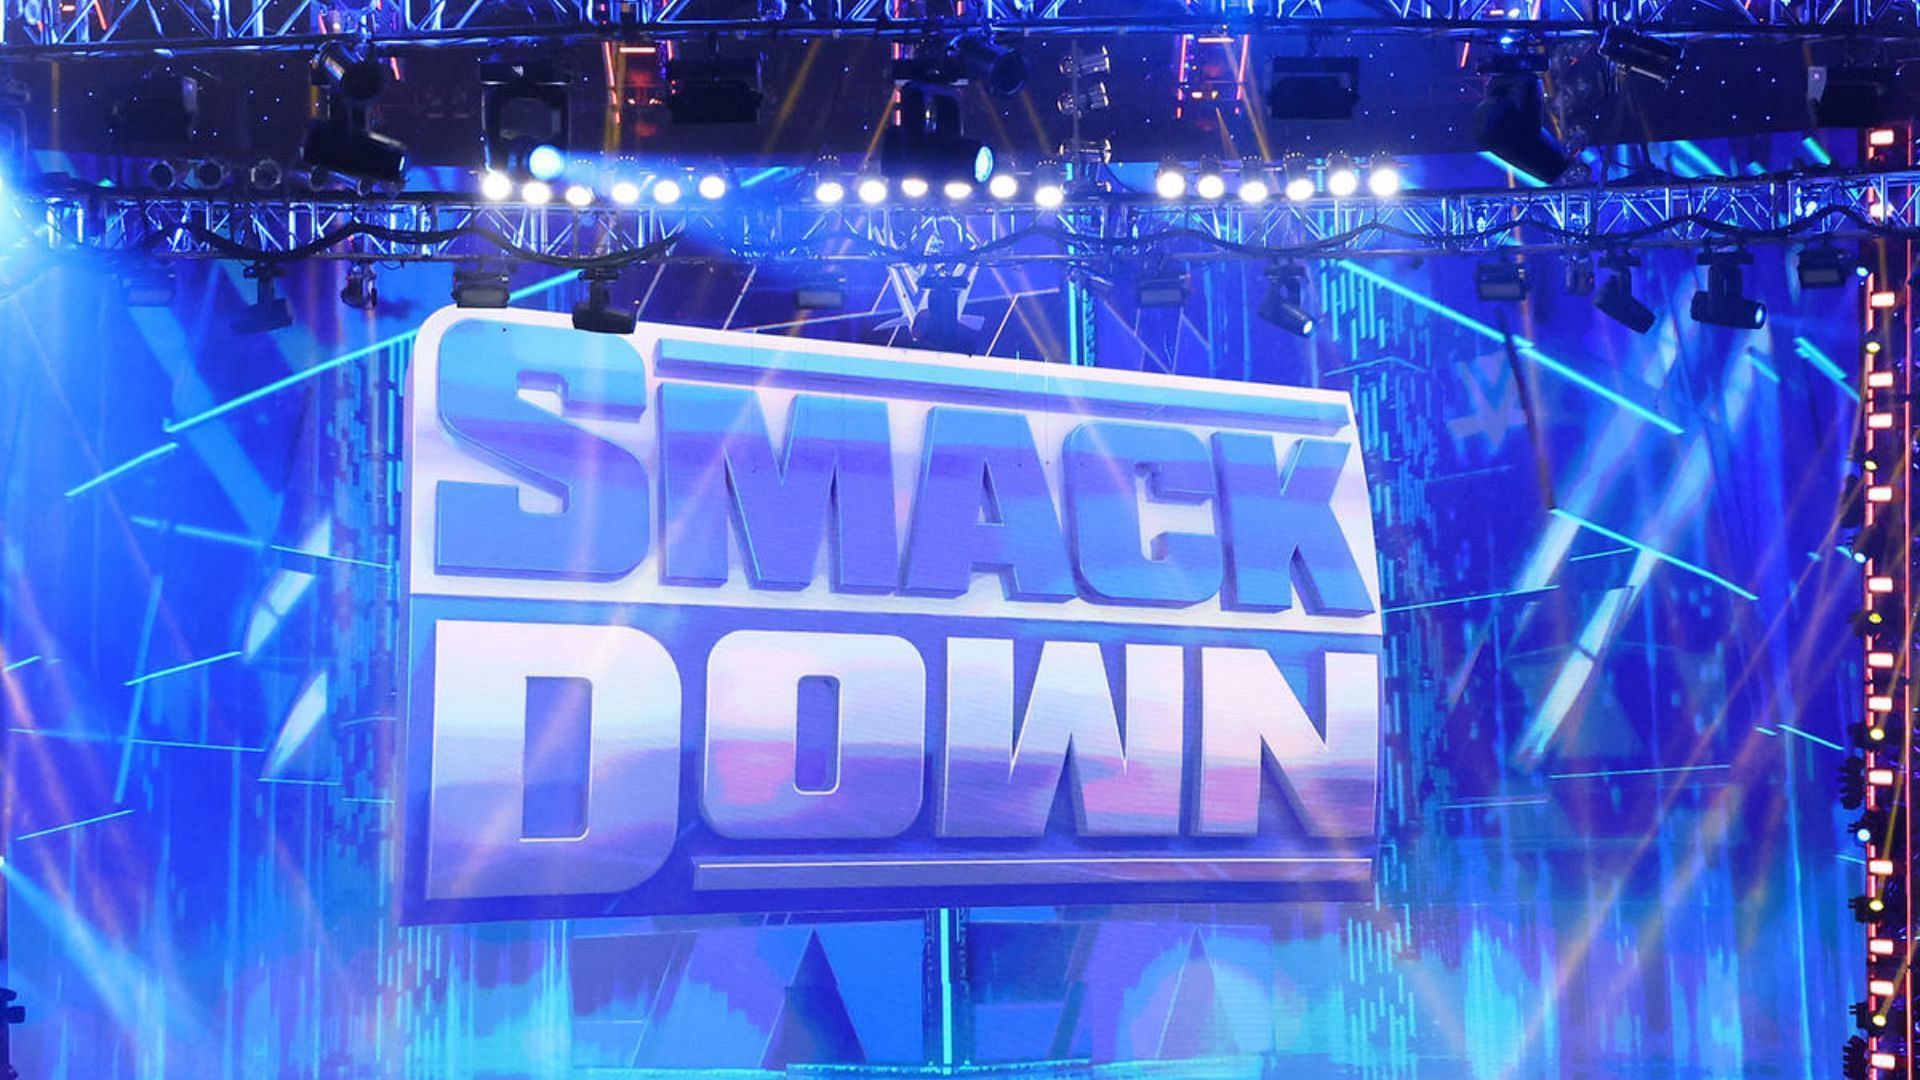 WWE SmackDown has kickstarted a new season!